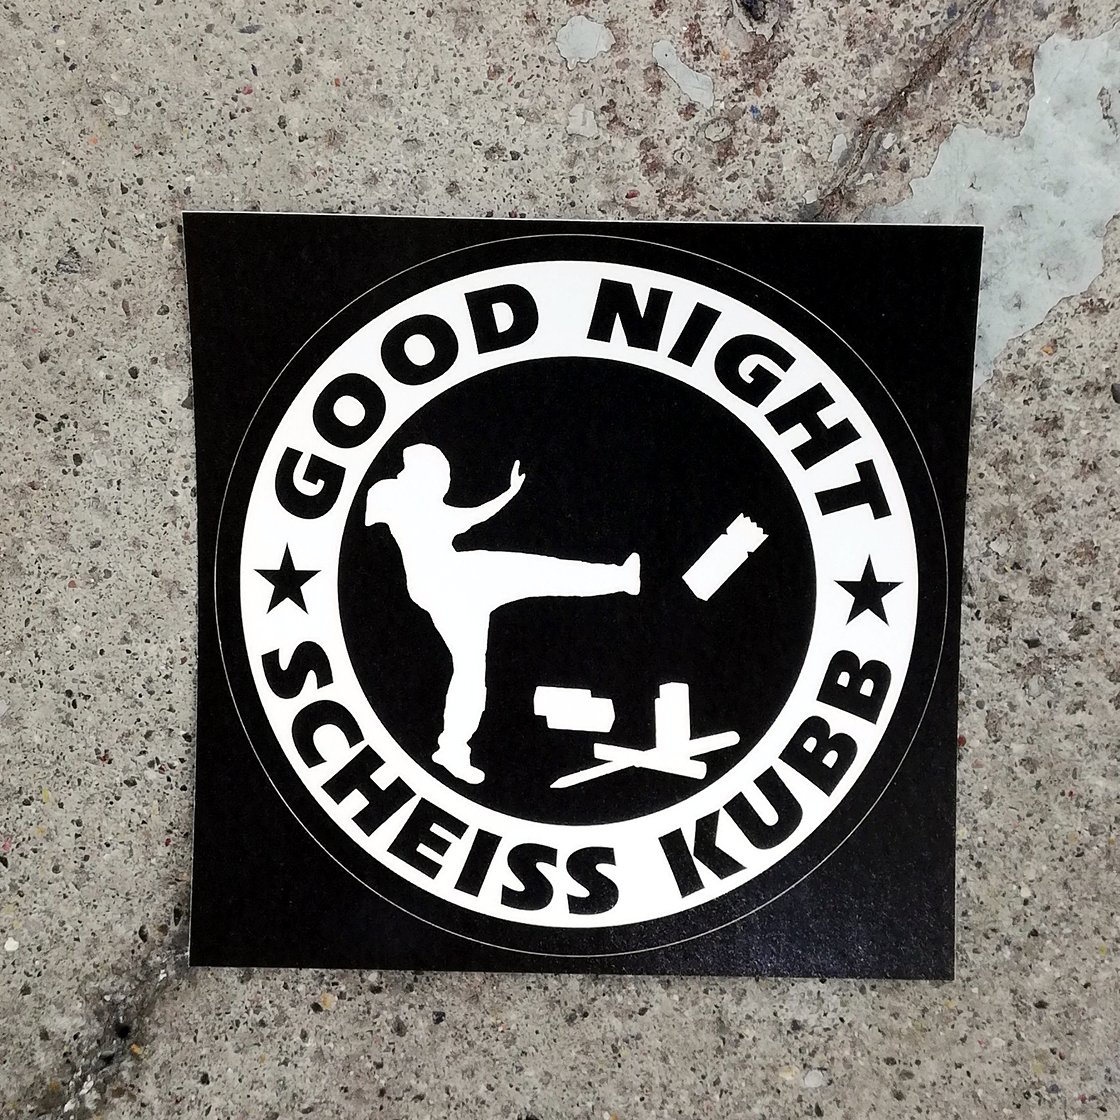 Image of GOOD NIGHT SCHEISS KUBB